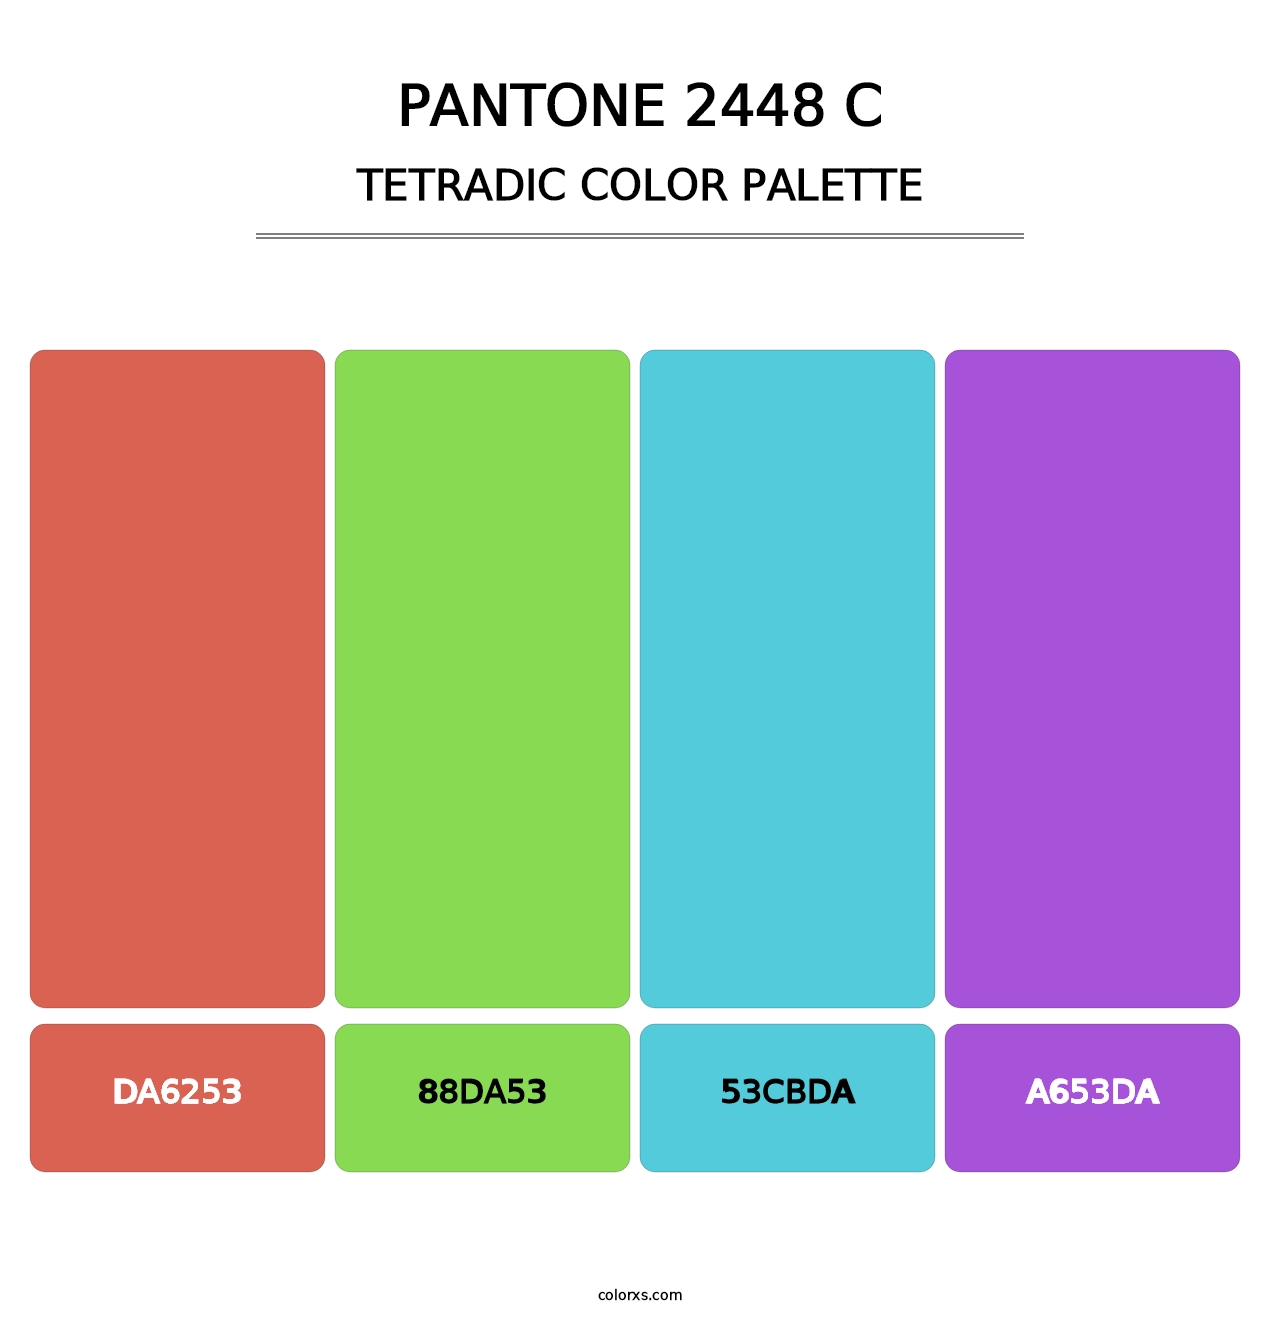 PANTONE 2448 C - Tetradic Color Palette